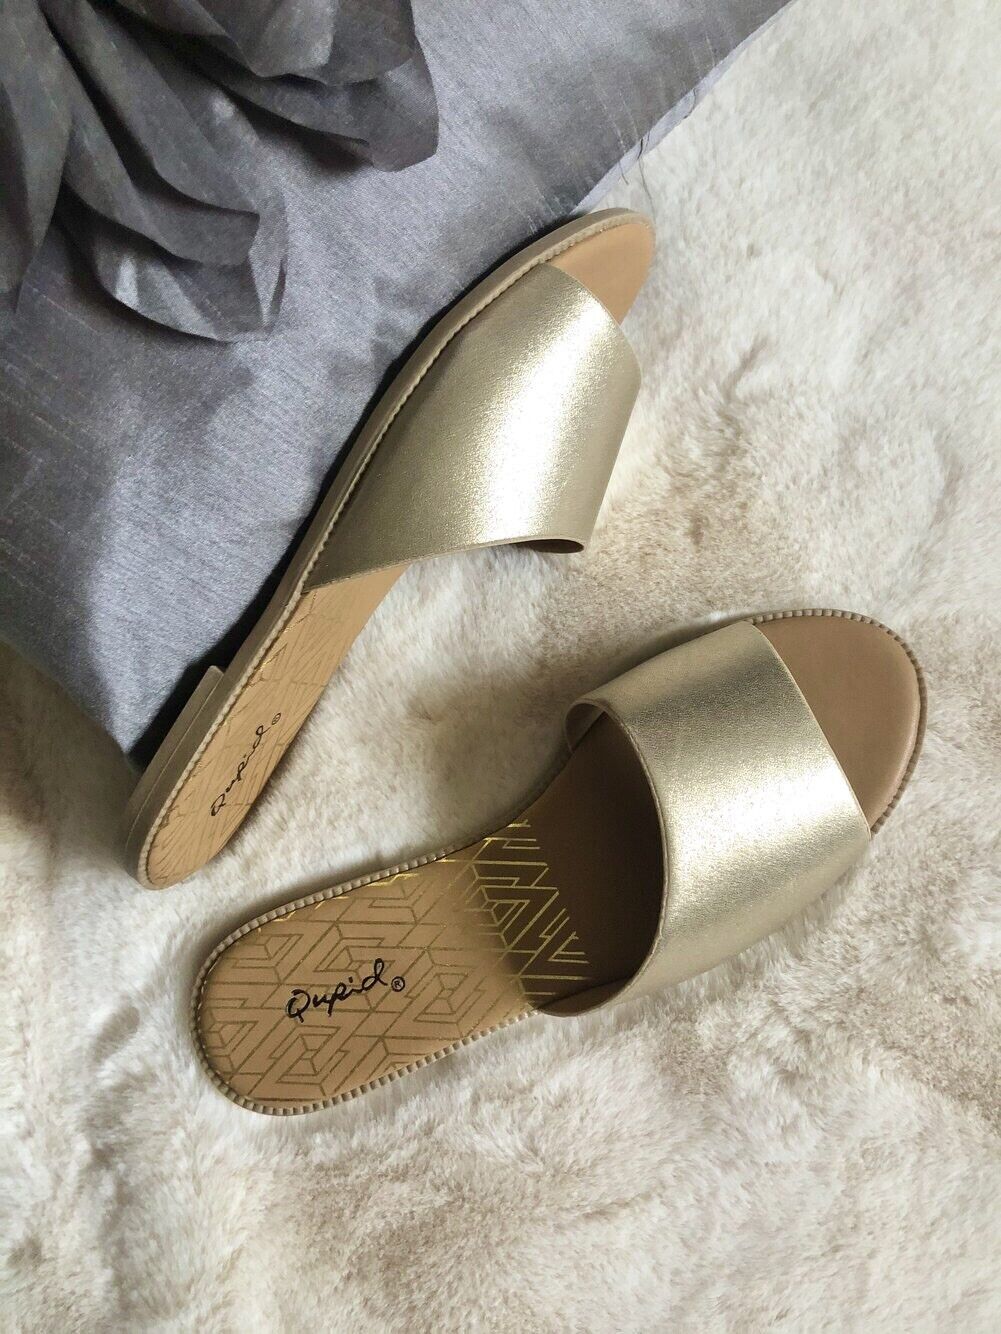 NWB Qupid Gold Single Strap Slide On Sandals Size 7